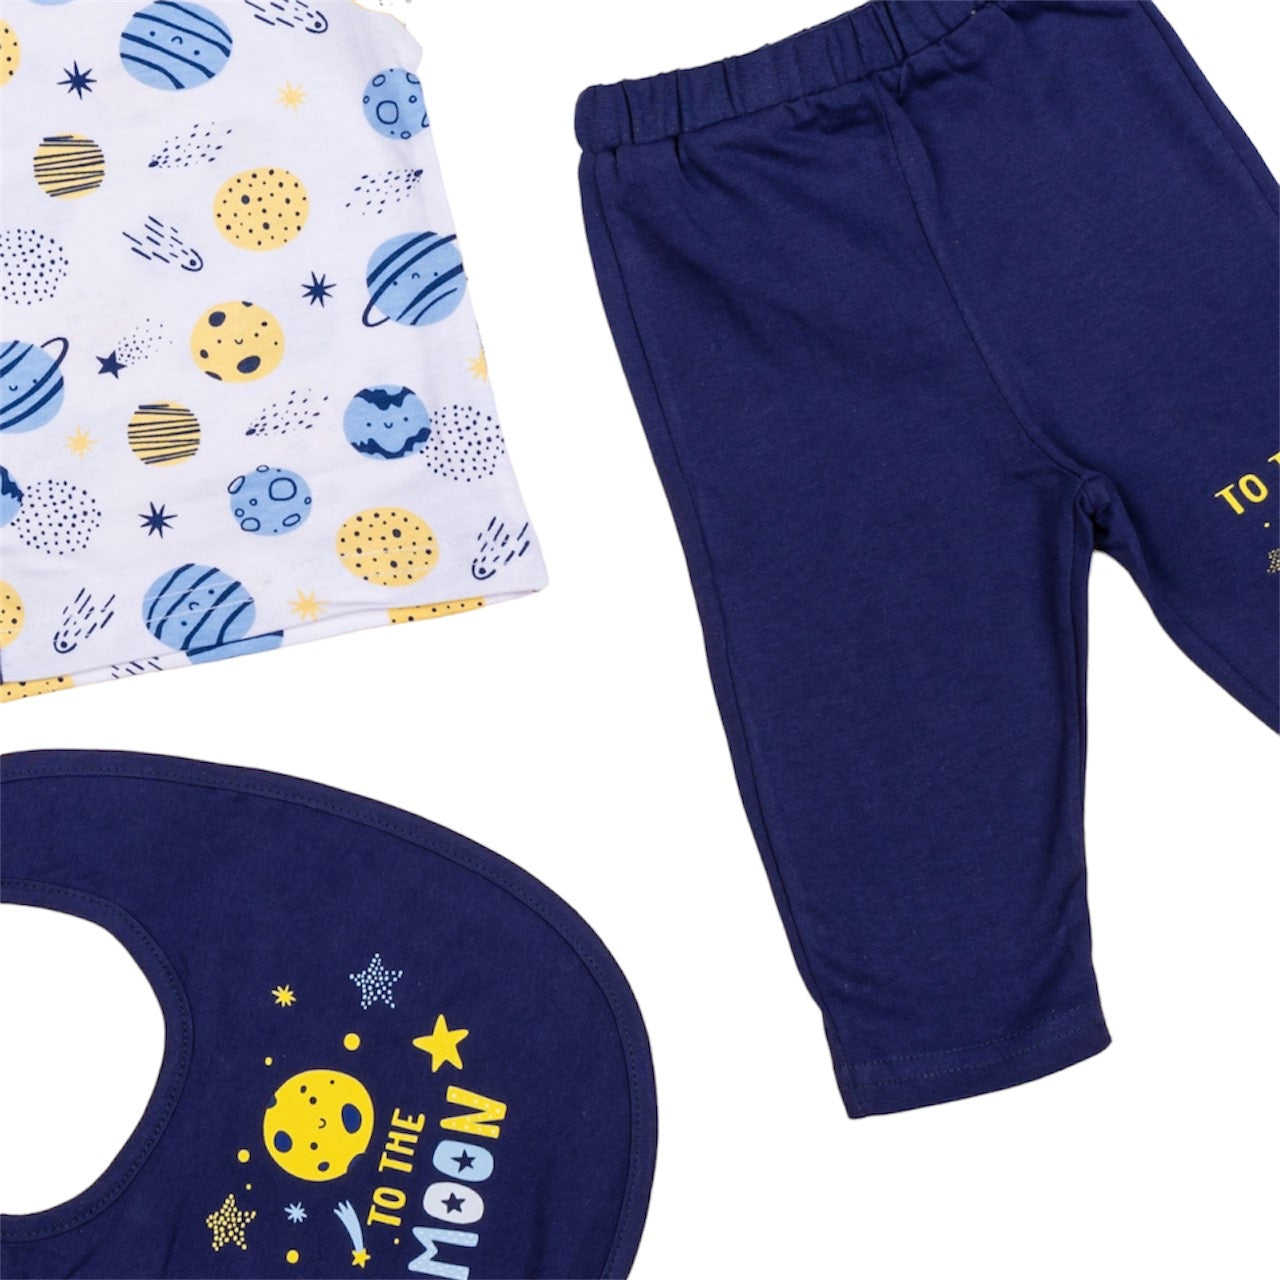 Little Astronaut Pajamas